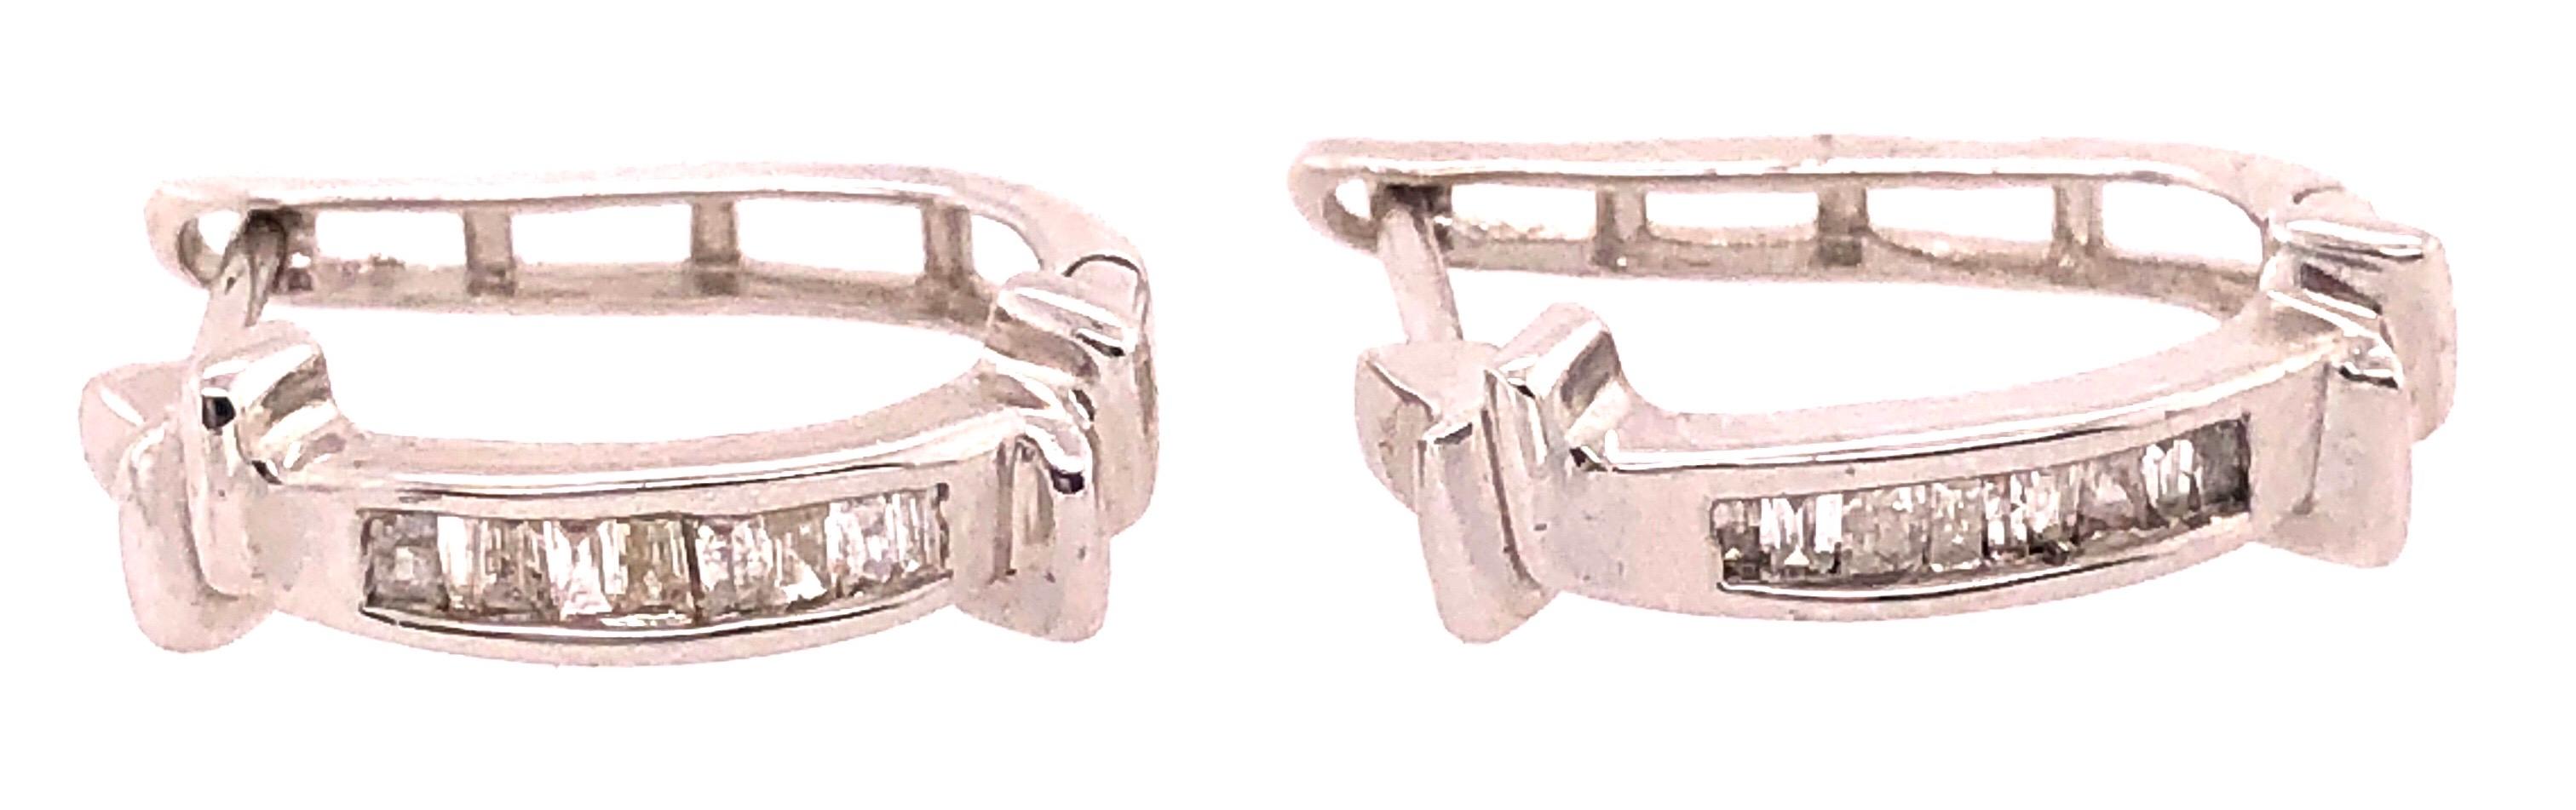 14 Karat White Gold Latch Back Earrings with Baguette Cut Diamond For Sale 3